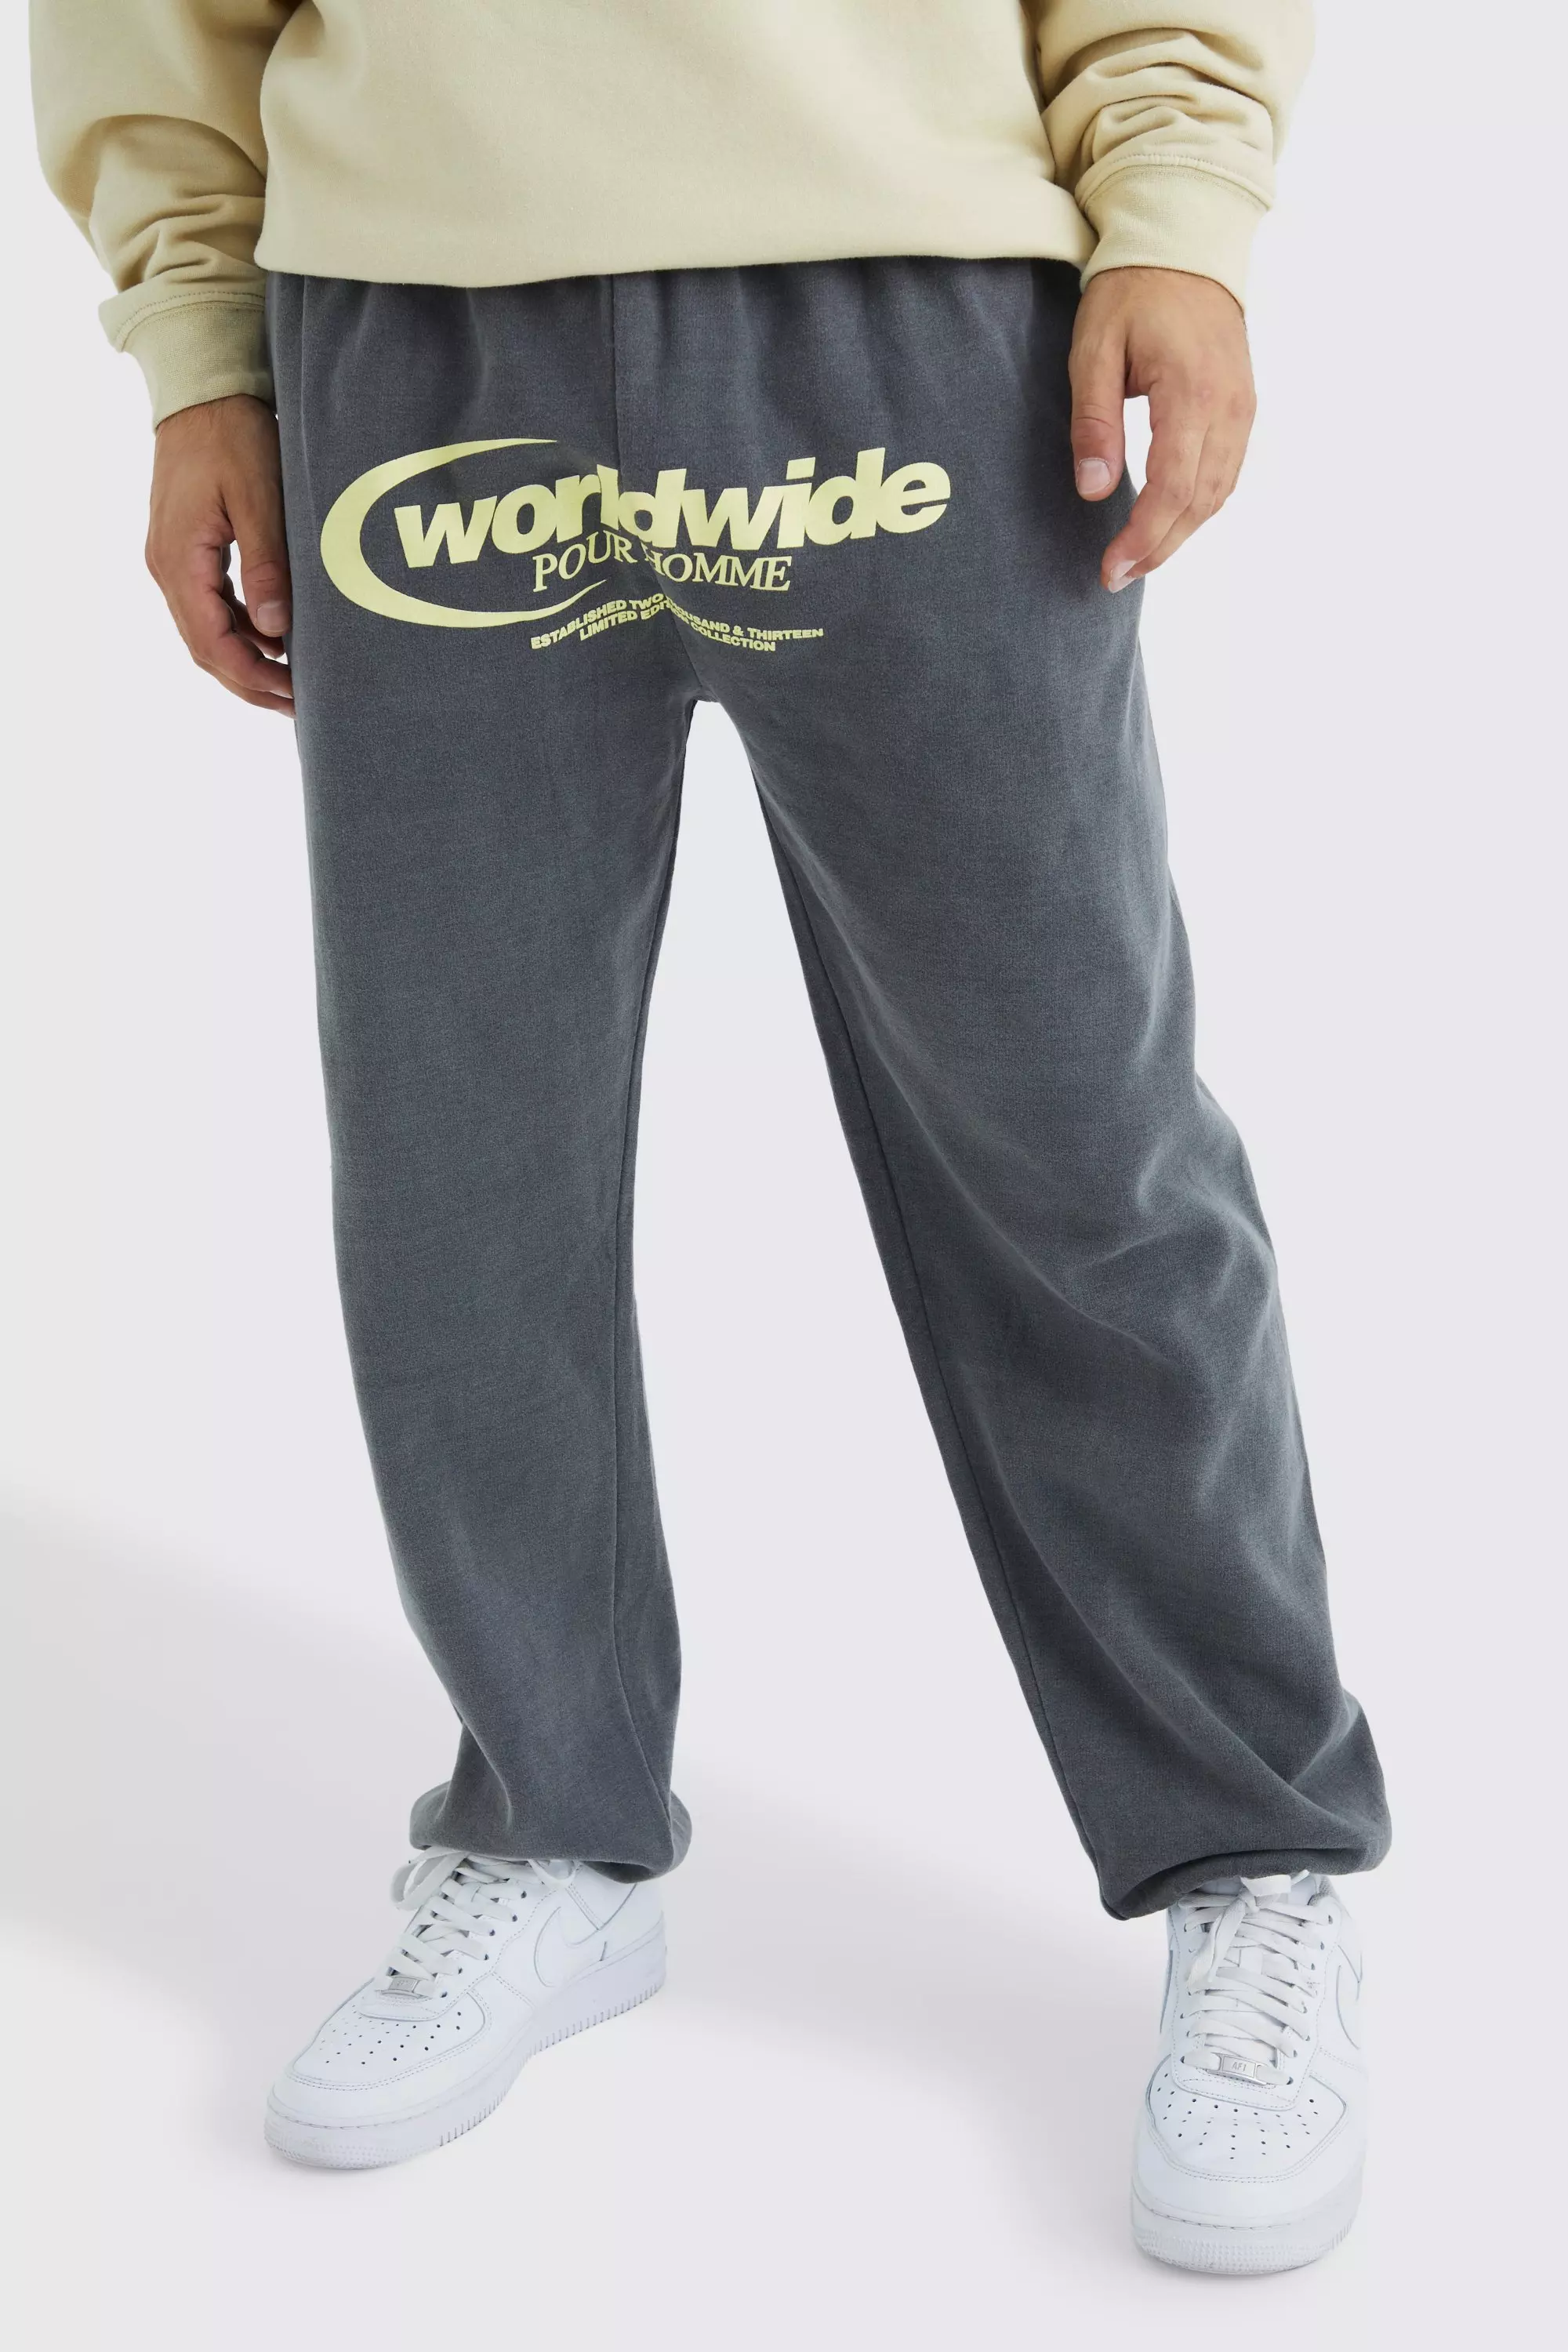 Oversized Worldwide Crotch Graphic Sweatpants